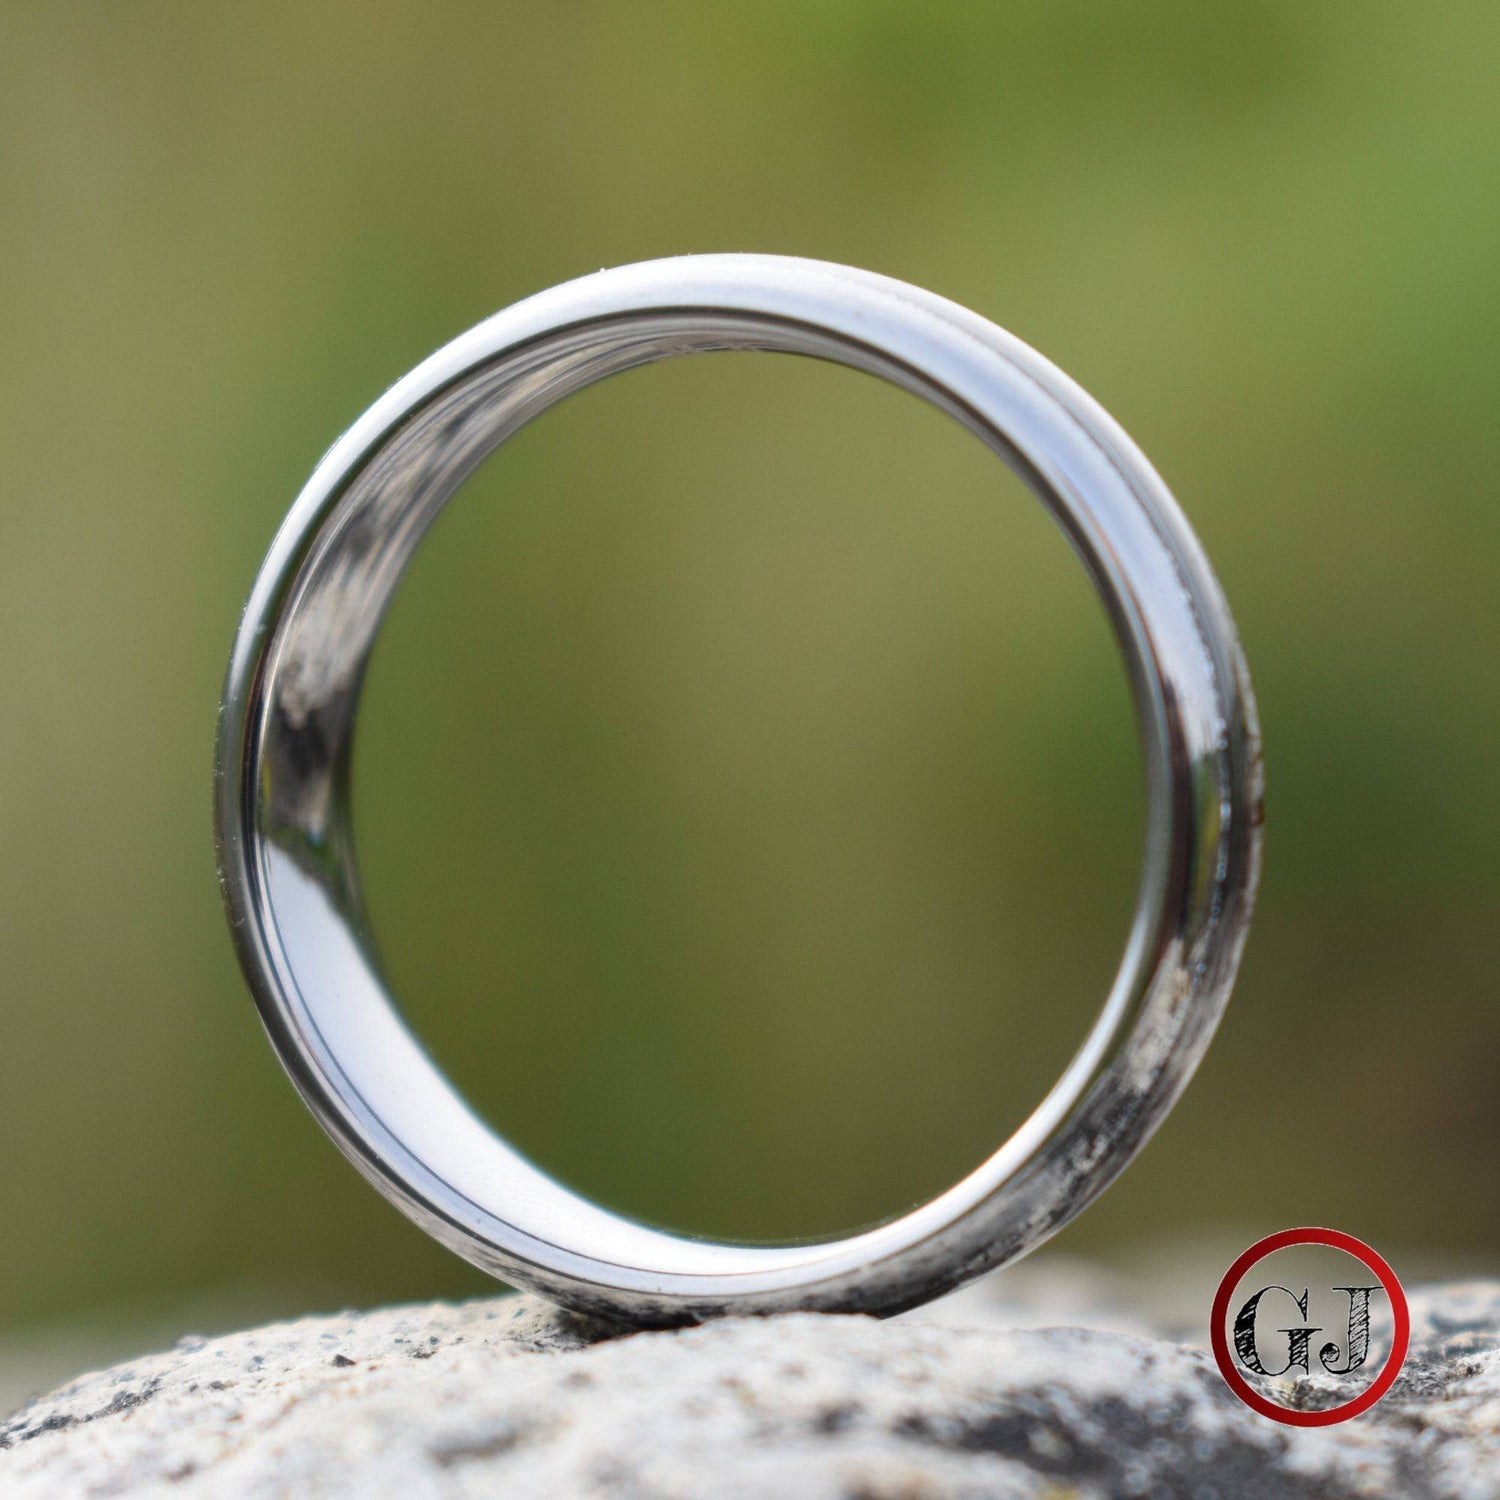 Silver Tungsten 6mm Ring with Deer Antler and Meteorite - Tungsten Titans